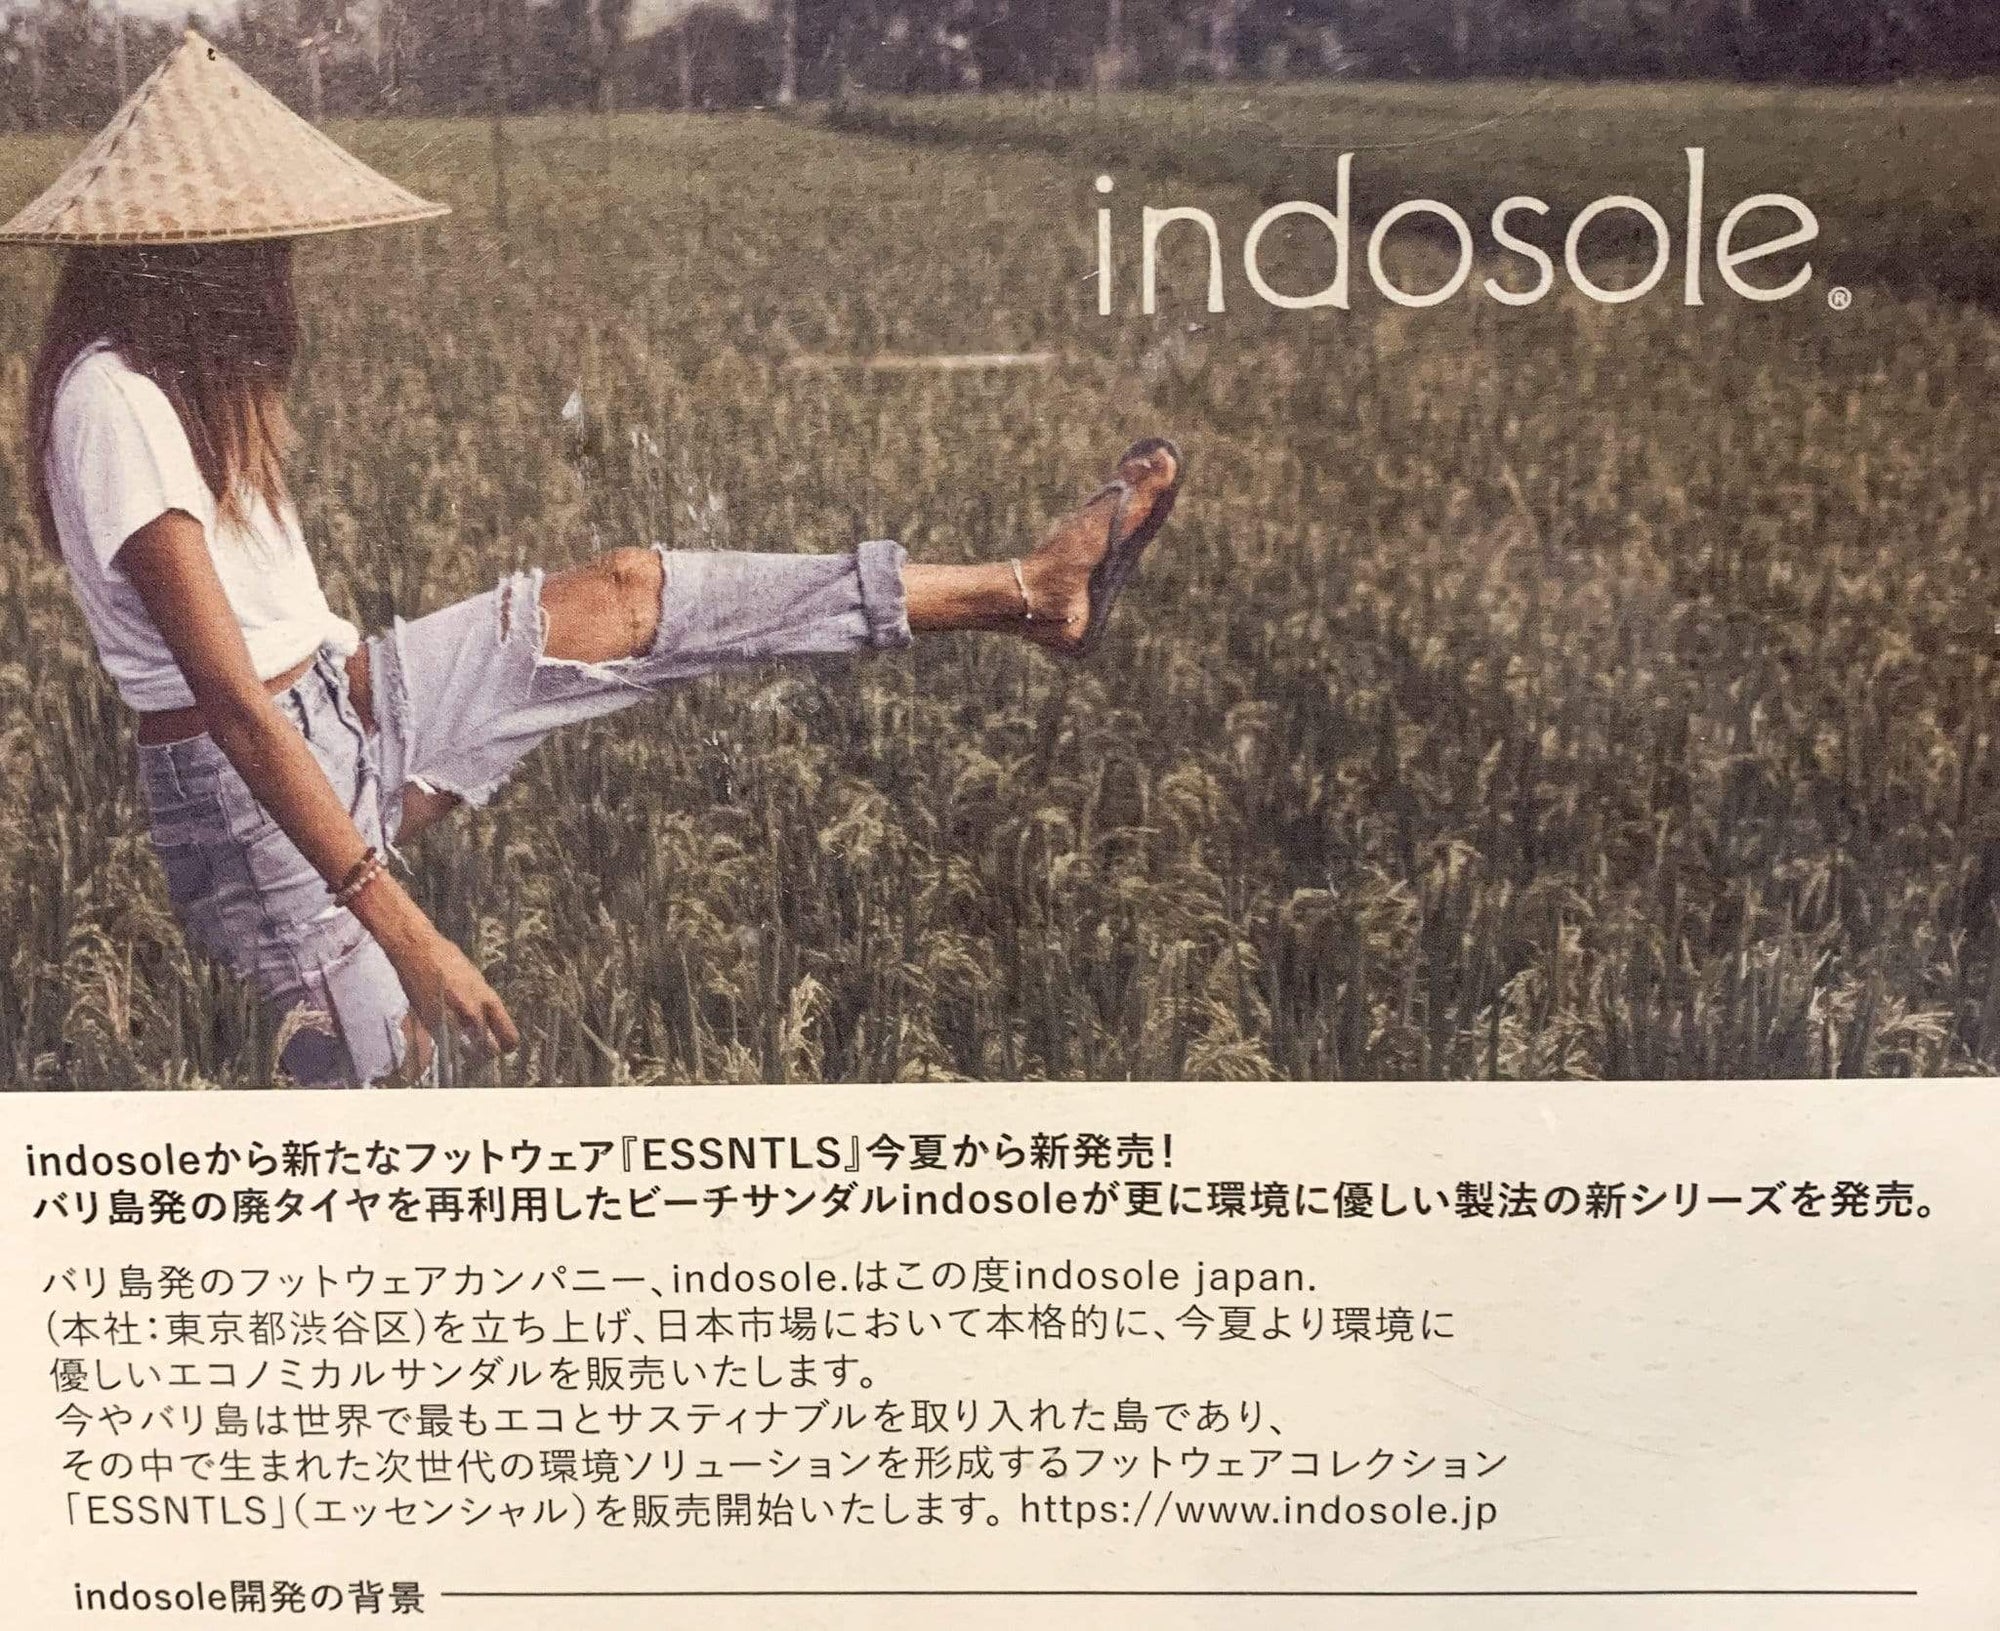 Introducing Indosole Japan